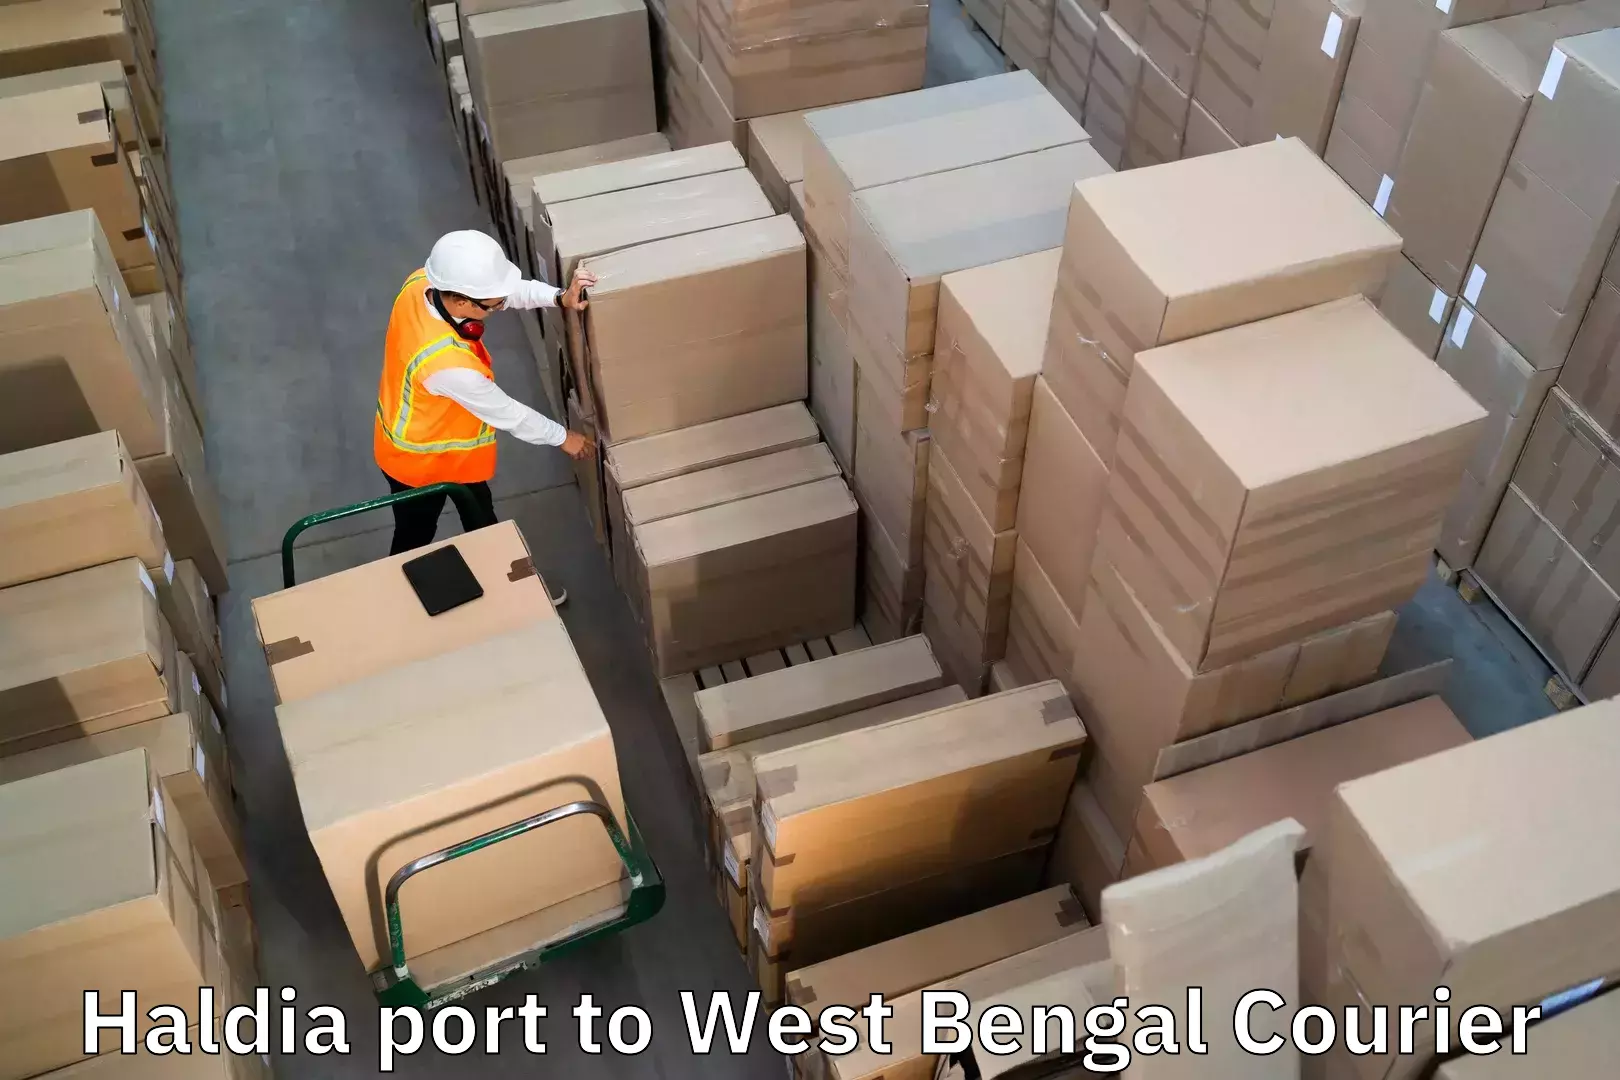 Luggage delivery app Haldia port to Paschim Medinipur